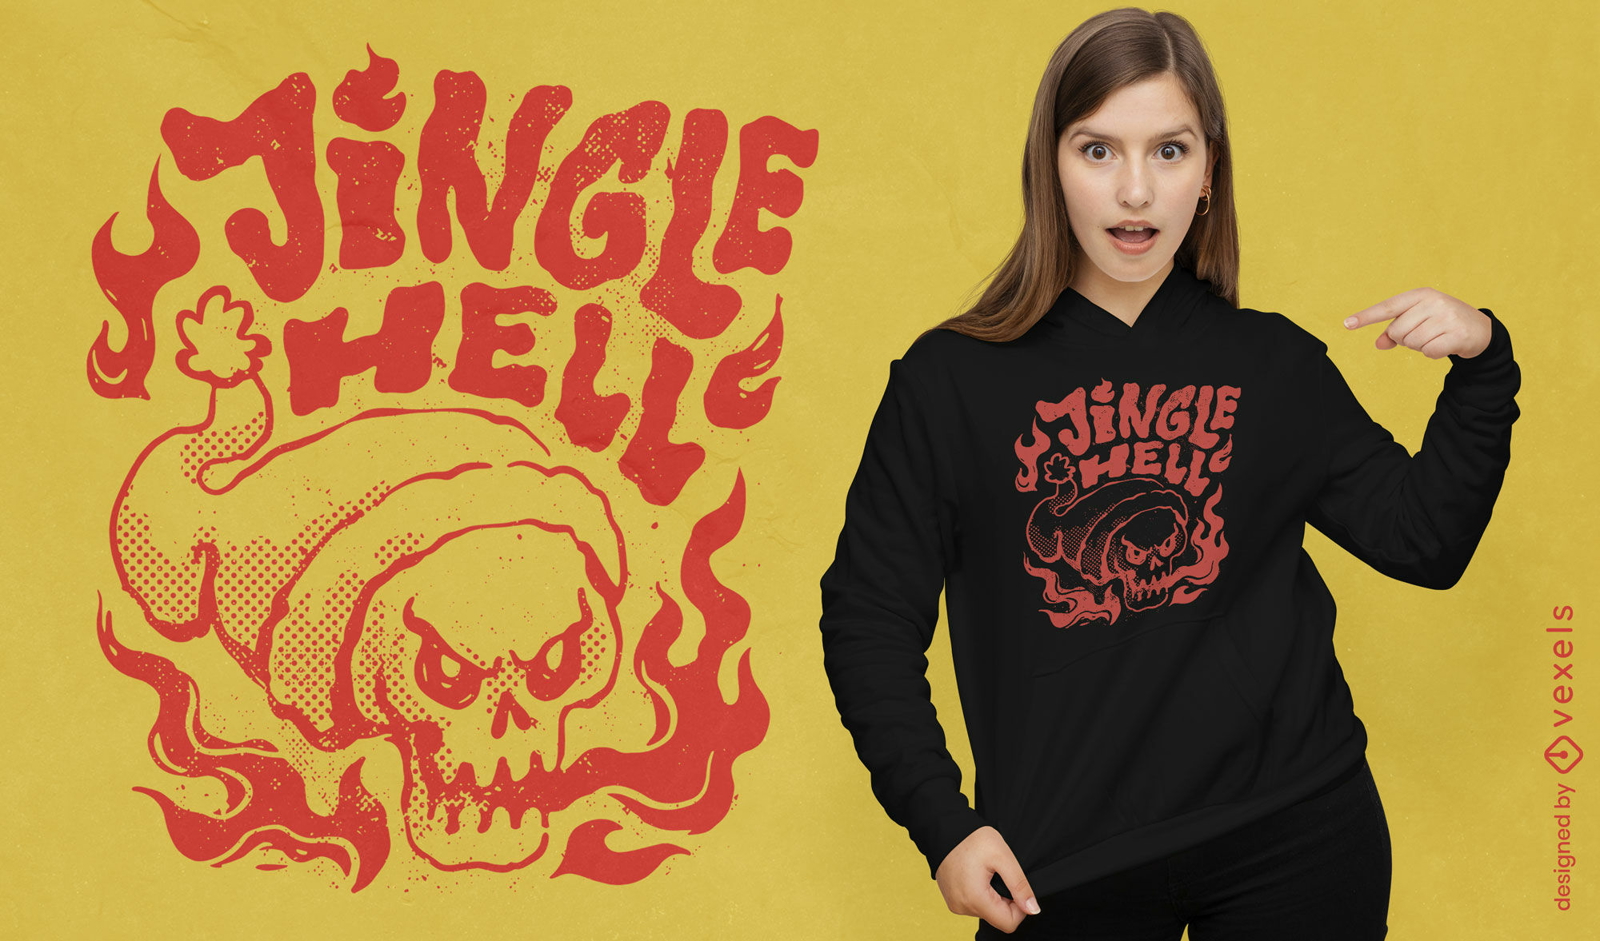 Jingle hell skull t-shirt design